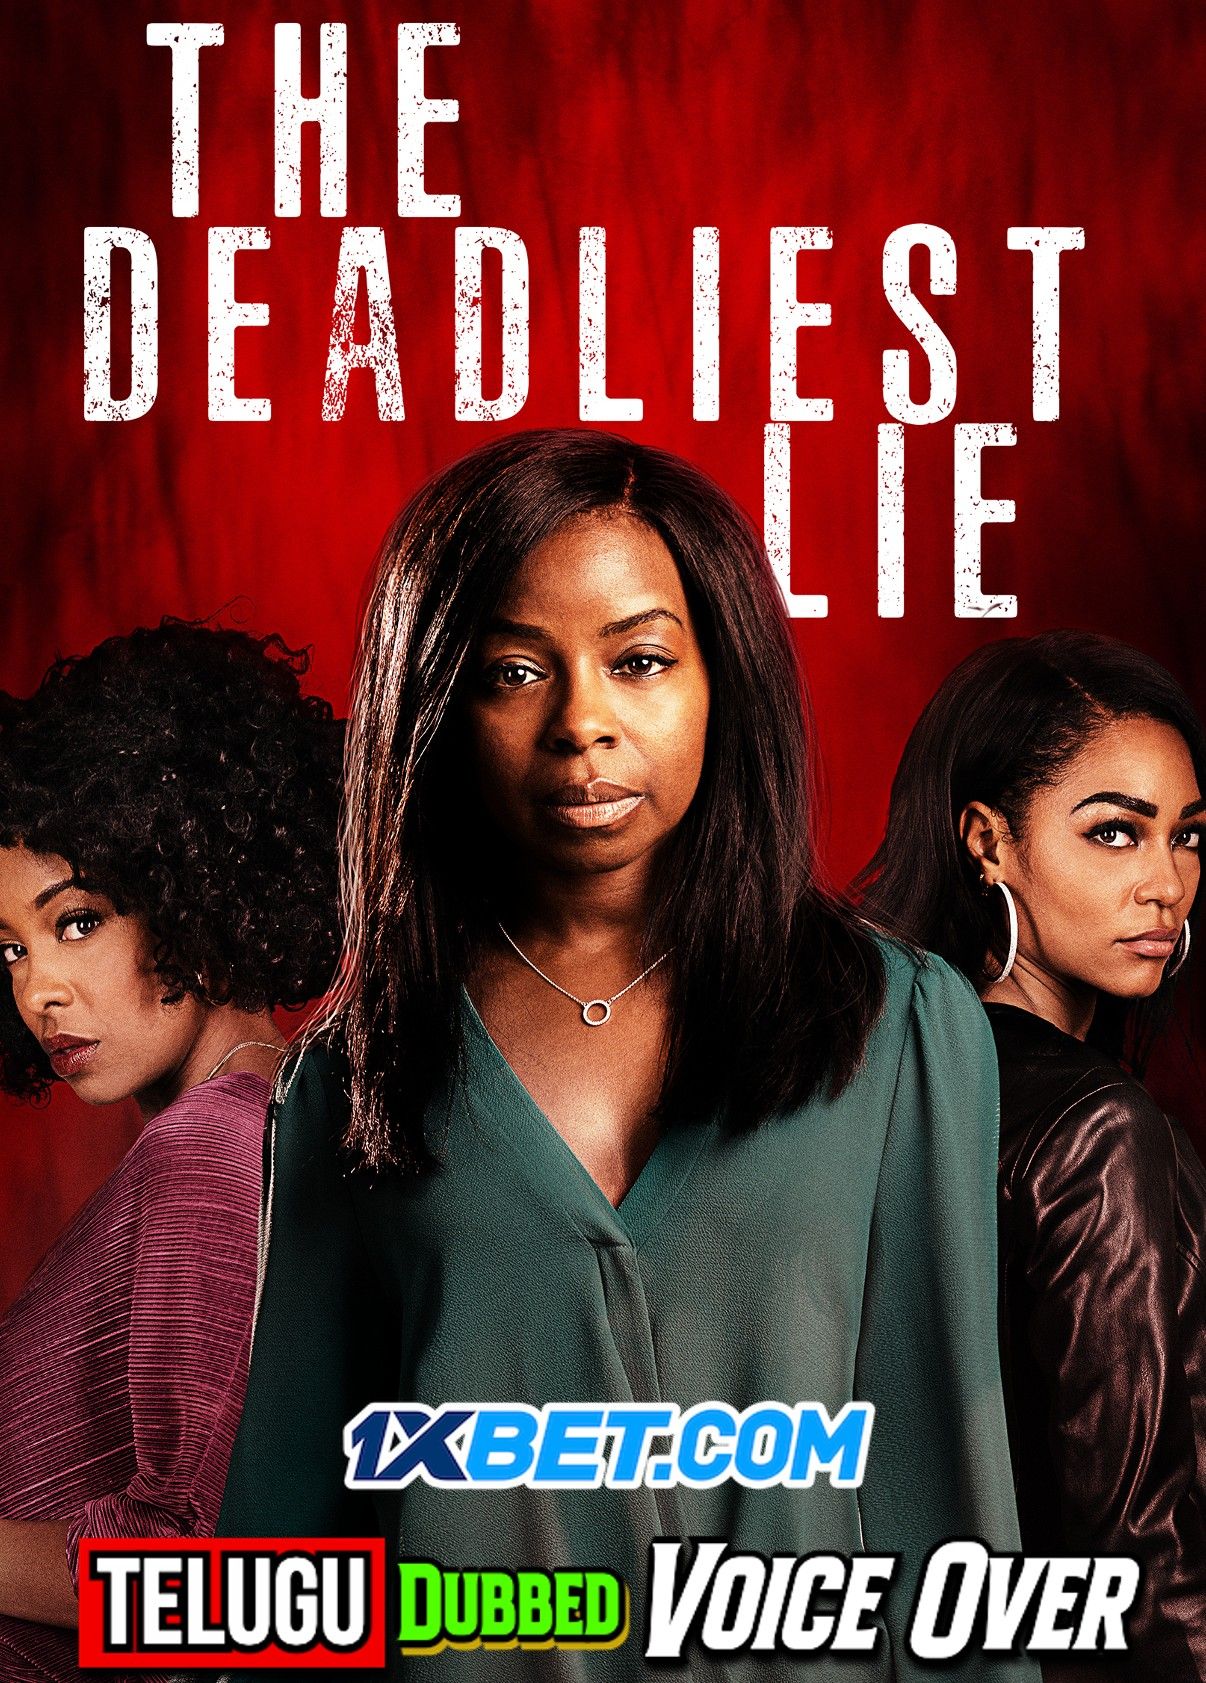 The Deadliest Lie (2021) Telugu (Voice Over) Dubbed WEB-DL download full movie